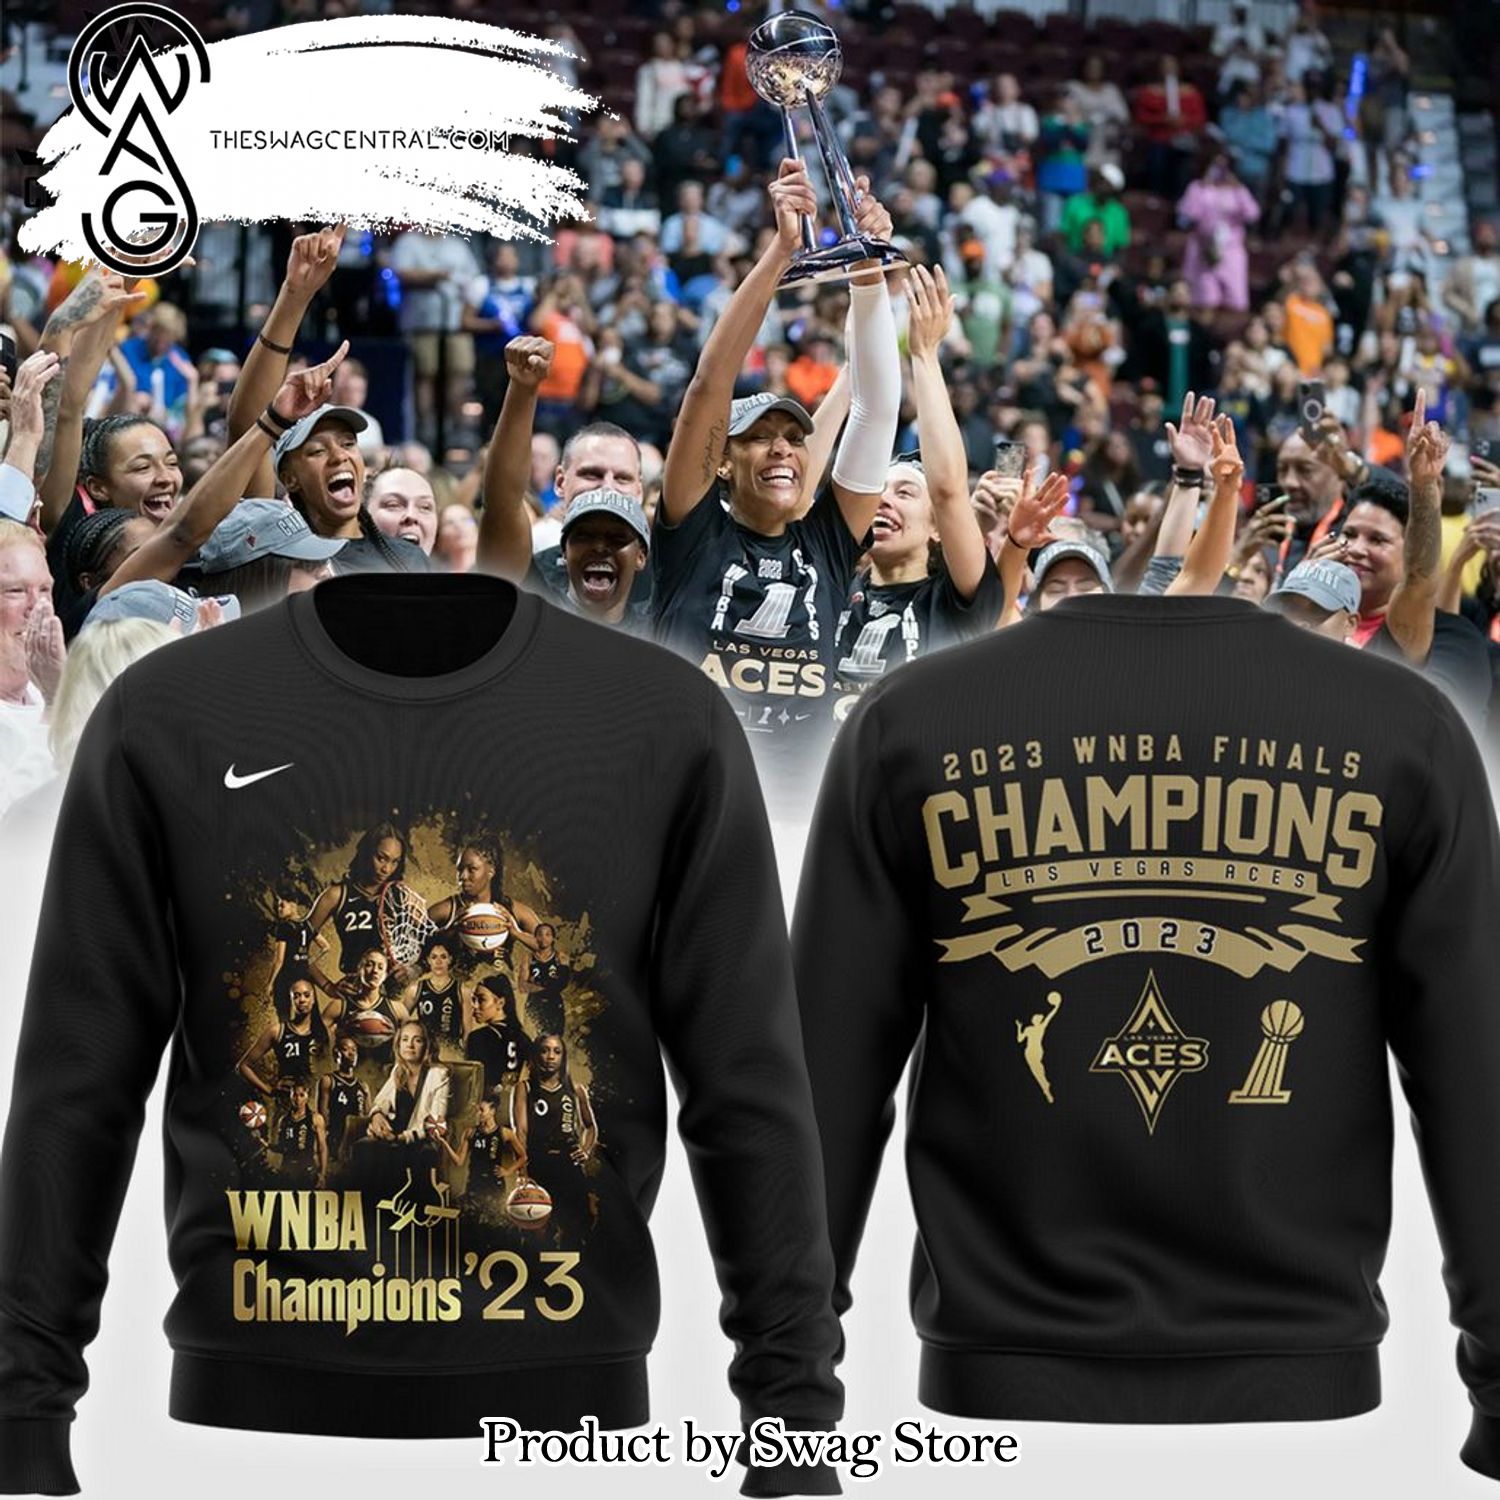 WNBA Champions 2023 Las Vegas ACES Wool Holiday Sweater